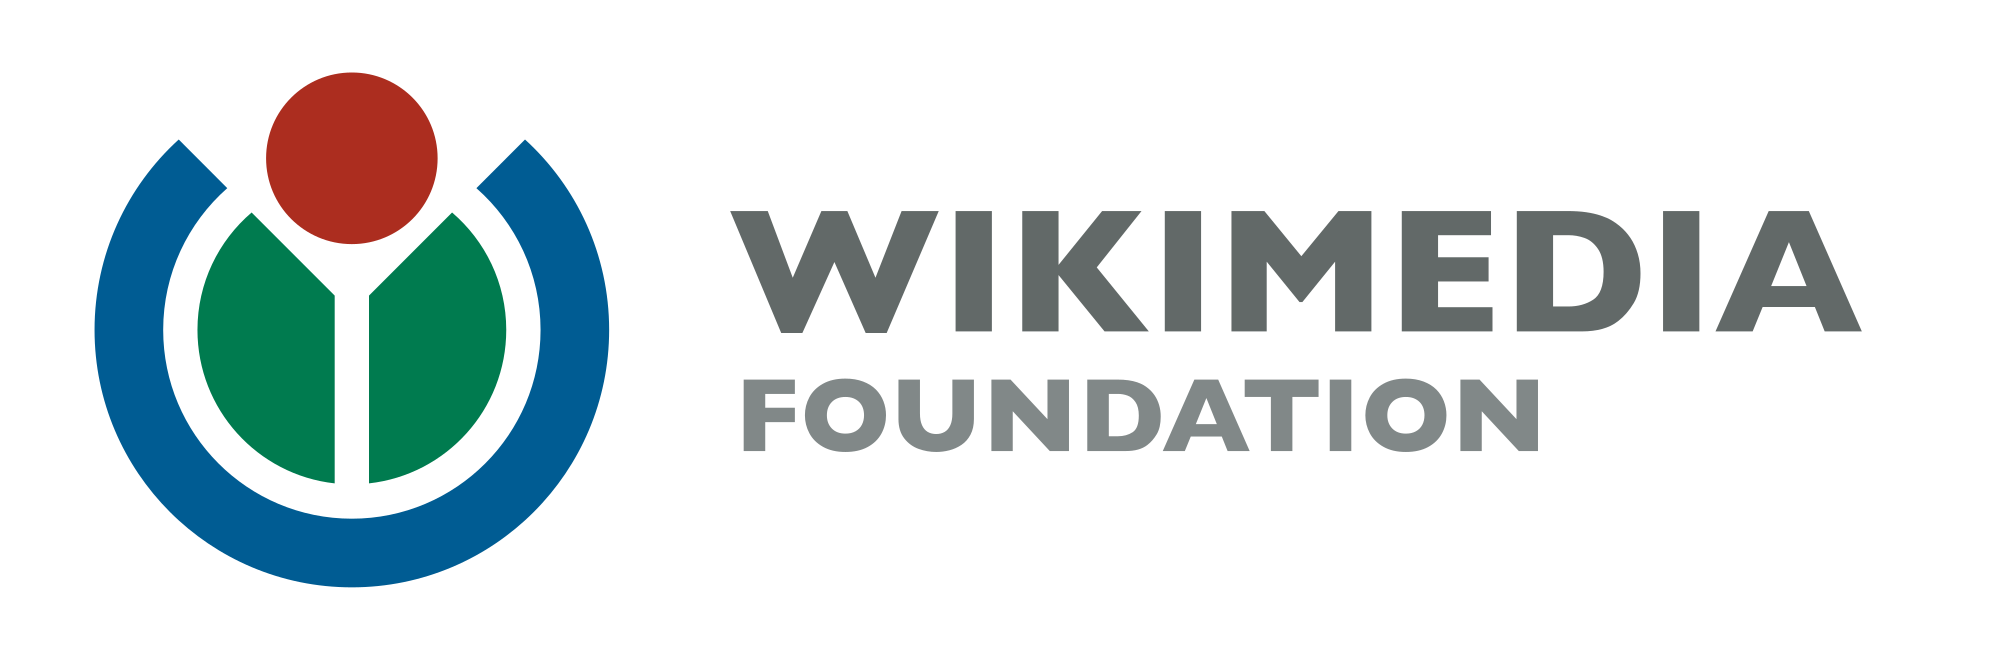 Wikimedia Foundation - Фонд Викимедиа